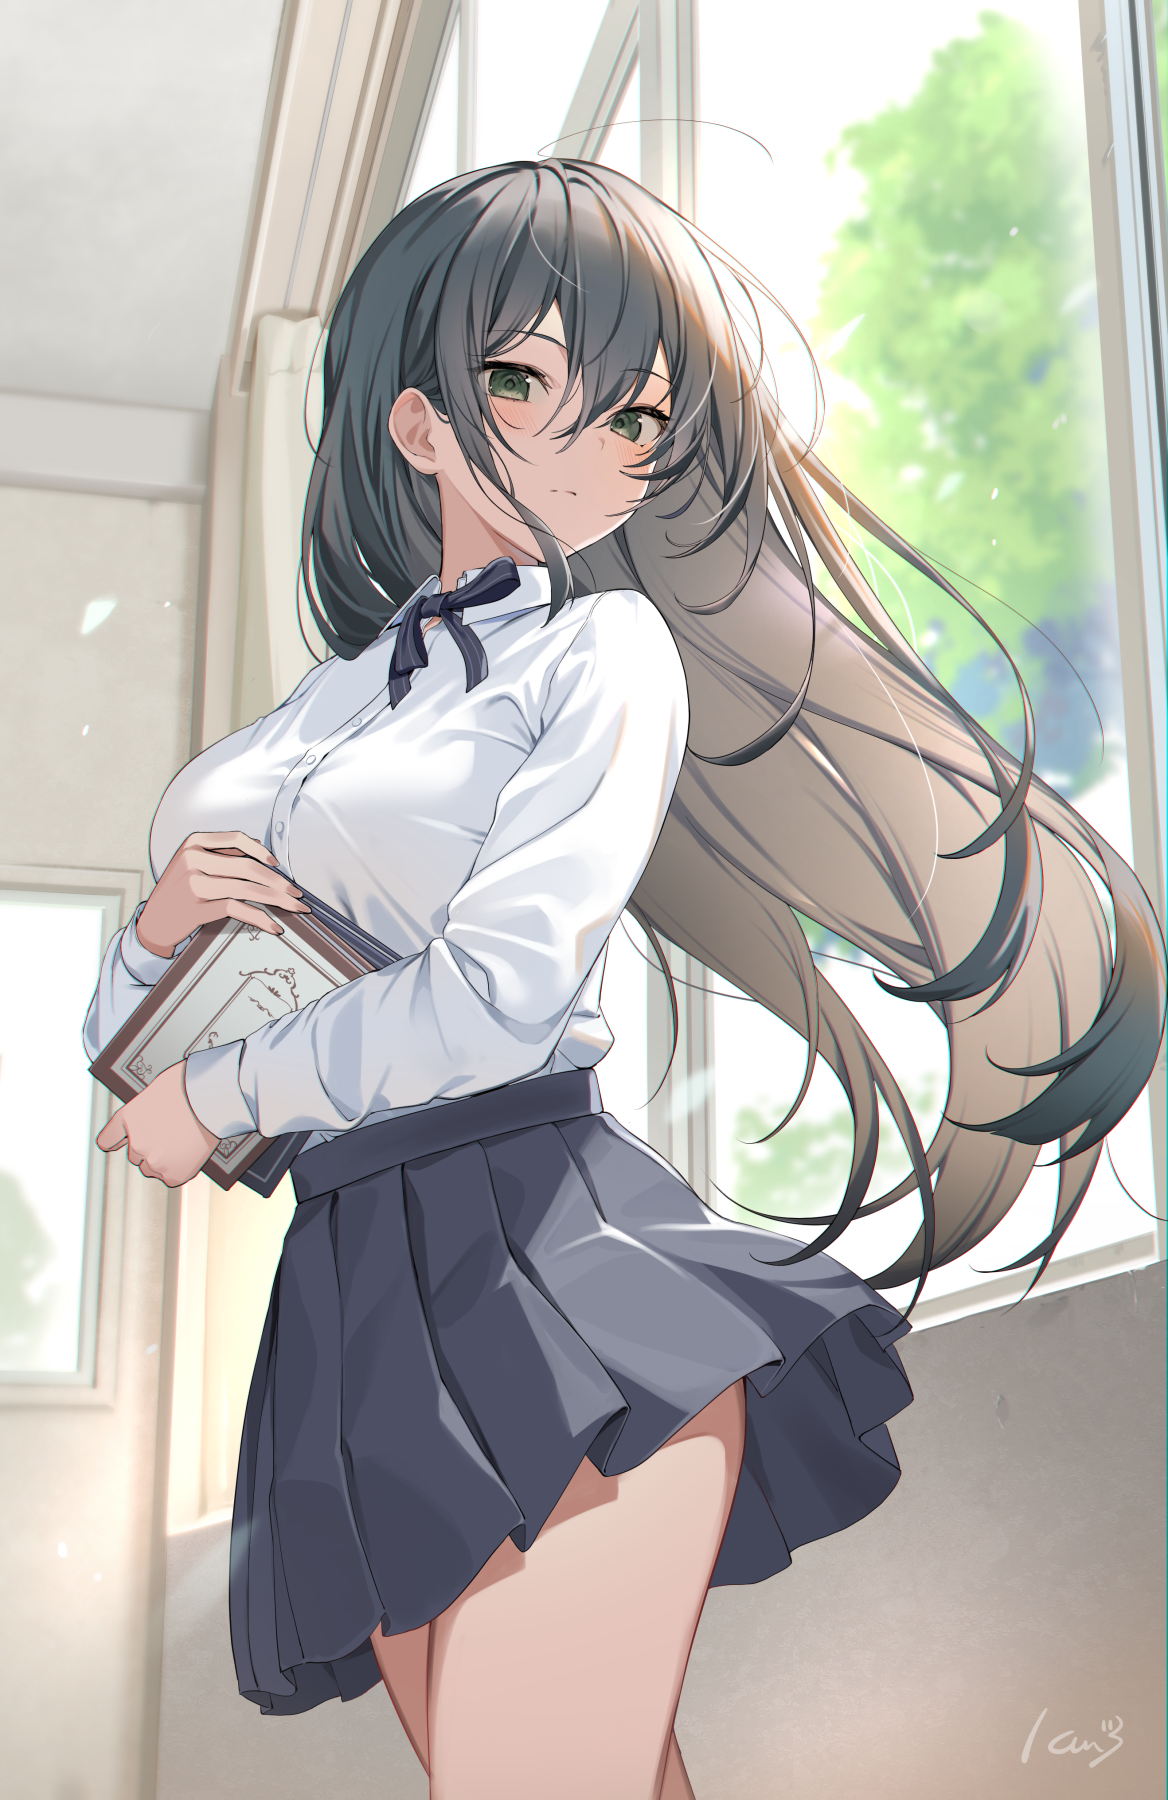 Anime 1168x1800 anime anime girls skirt long hair big boobs thighs looking at viewer standing women indoors green eyes dark hair upskirt artwork Icomochi